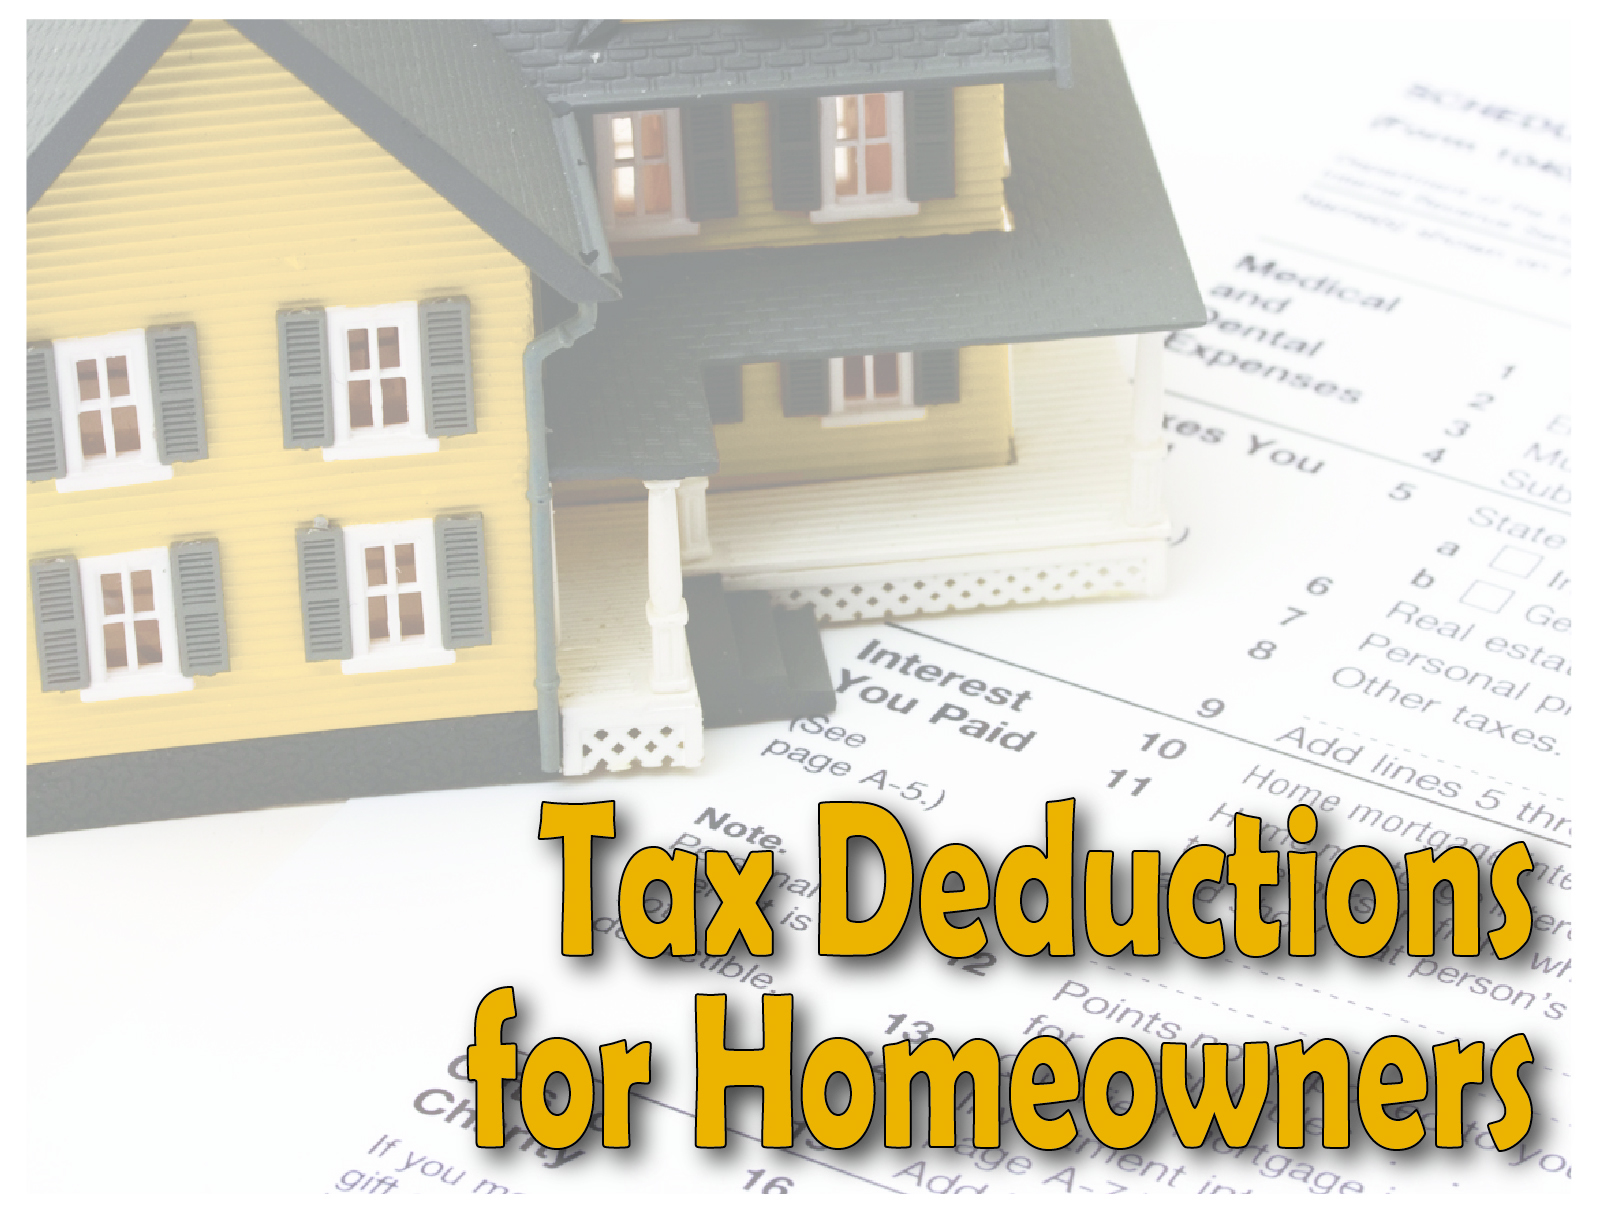 Don't Miss These Home Tax Deductions - rutenbergblog.com